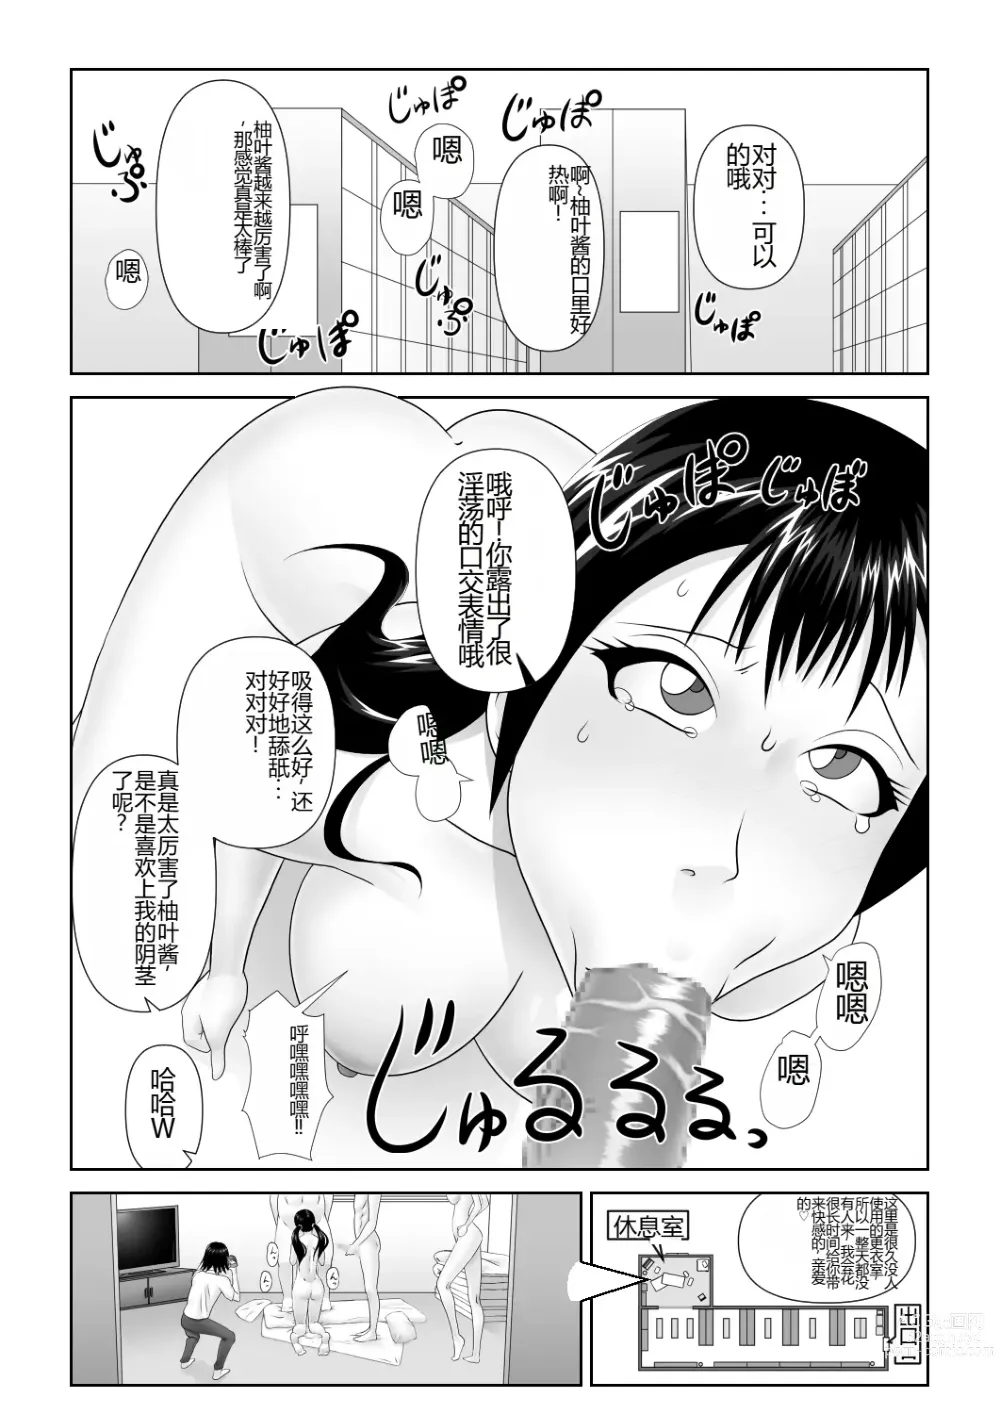 Page 15 of doujinshi Strange School